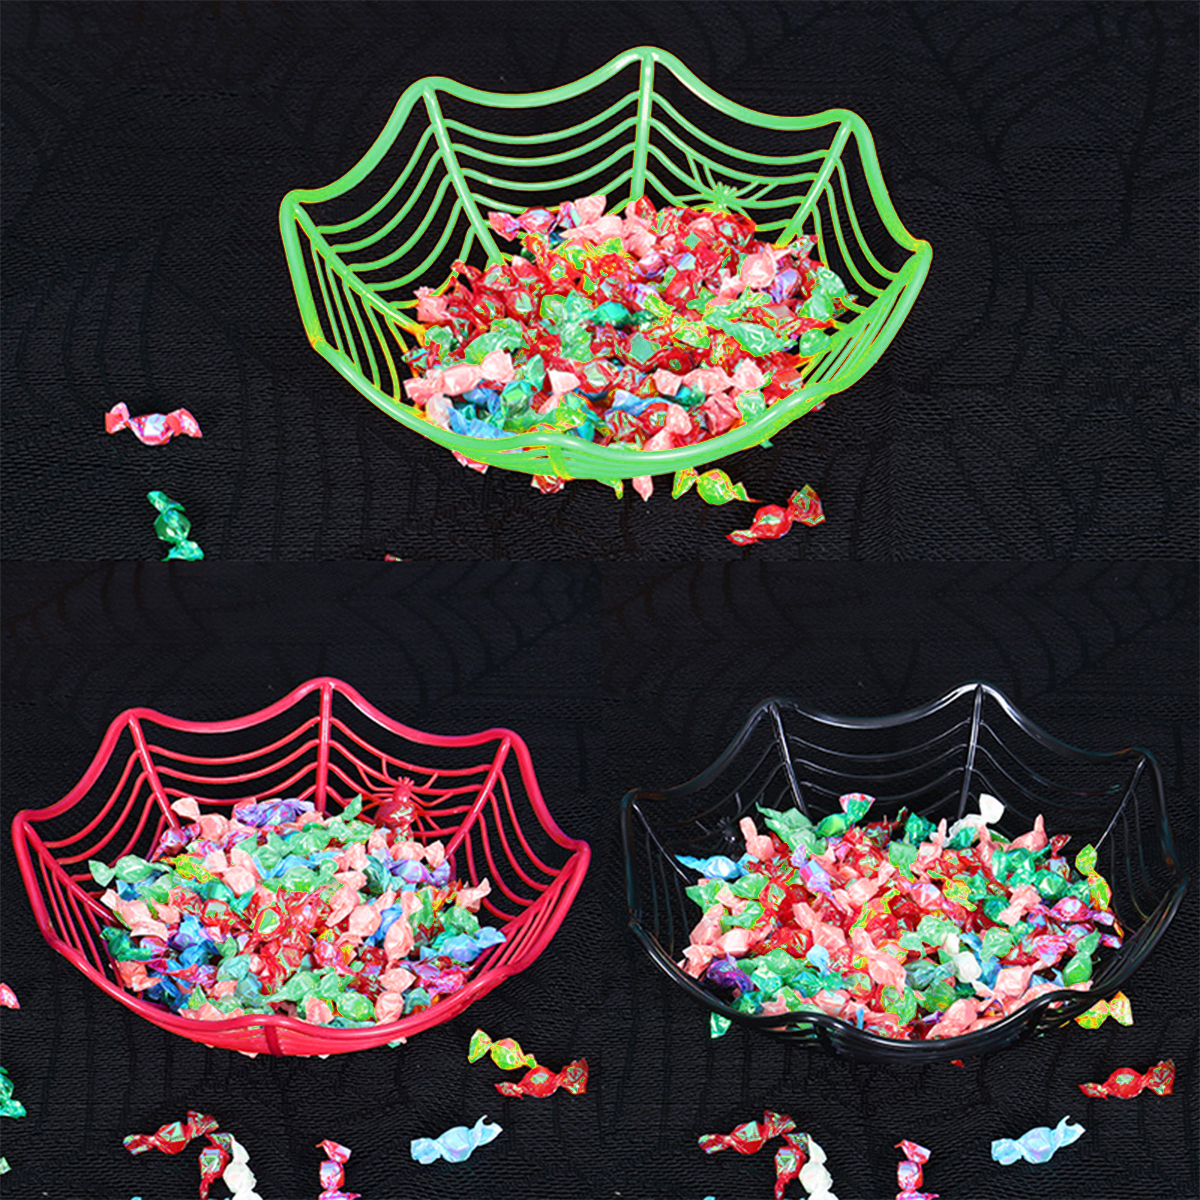 Halloween-Candy-Basket-Bowls-Spider-Web-Plastic-Bowls-for-Kids-Trick-or-Treat-Candy-Halloween-Basket-1751560-5